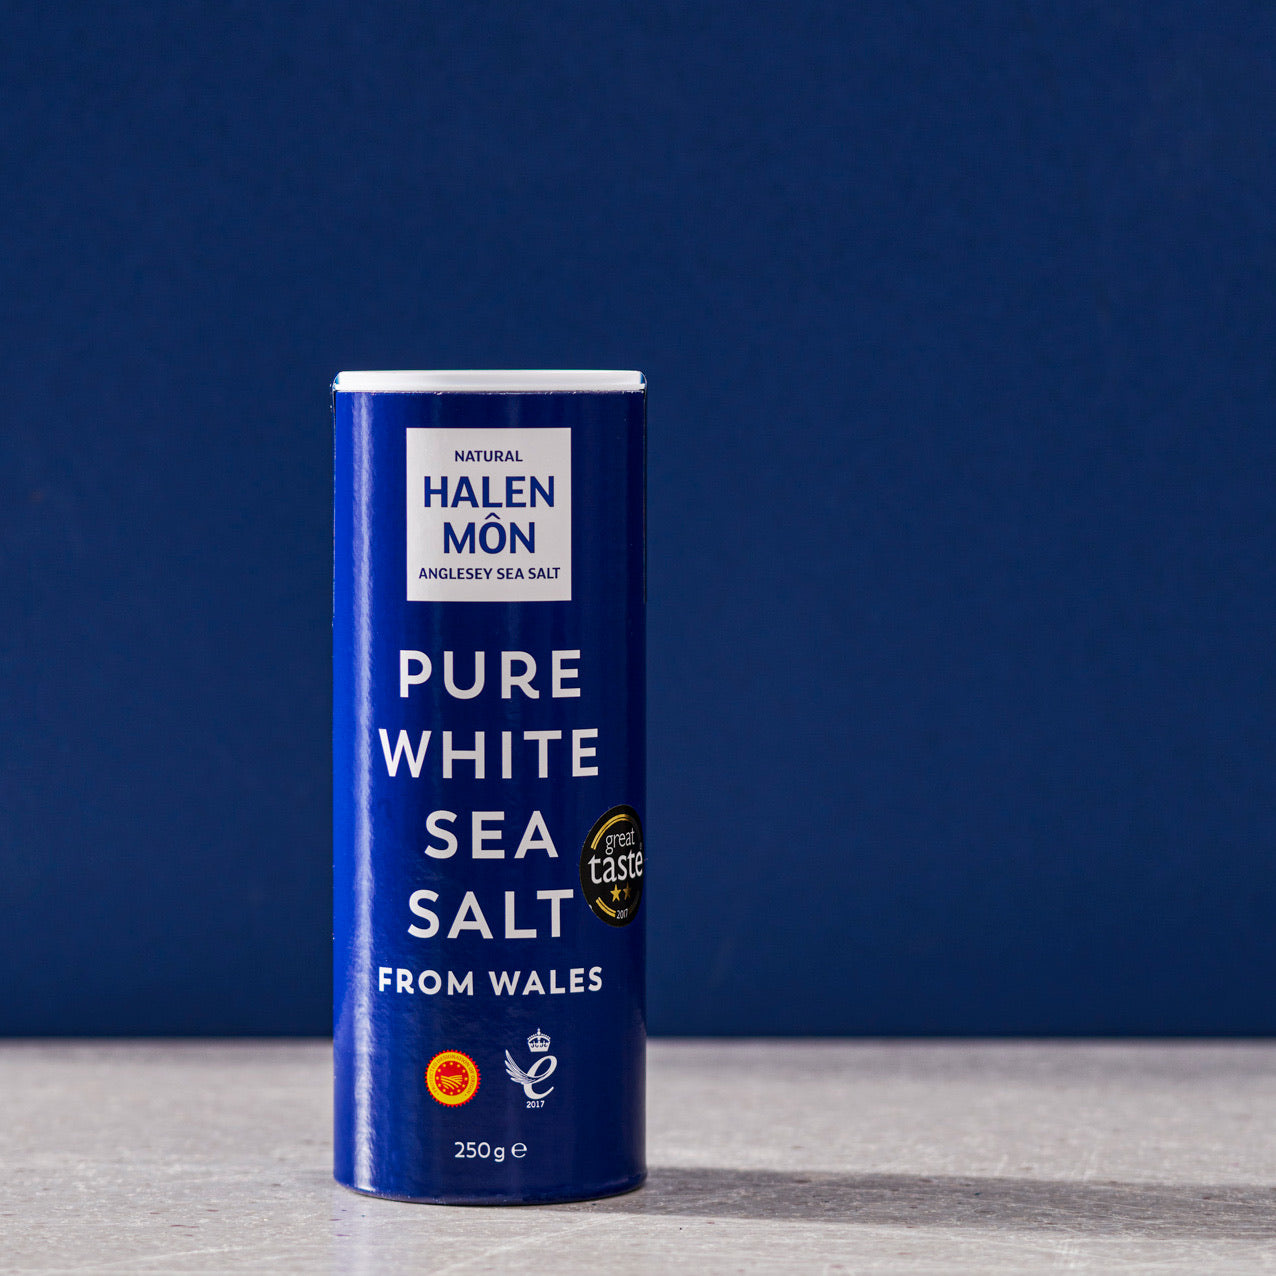 Halen Mon 250g Pure White Sea salt